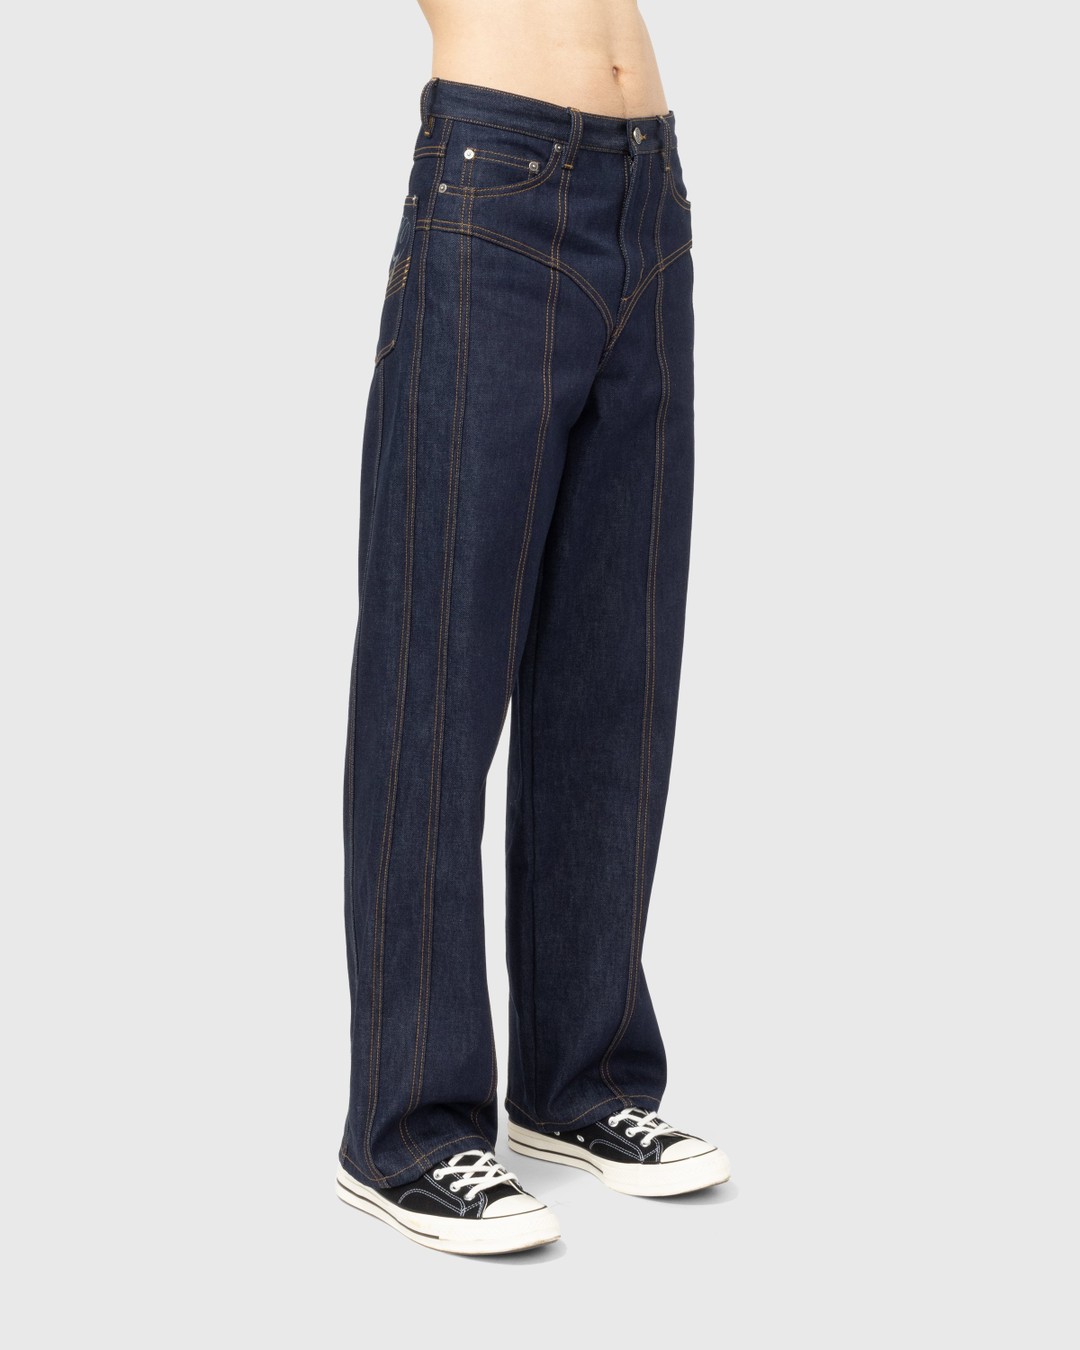 Jean Paul Gaultier – Raw Low-Rise Jeans Indigo - Pants - Blue - Image 2